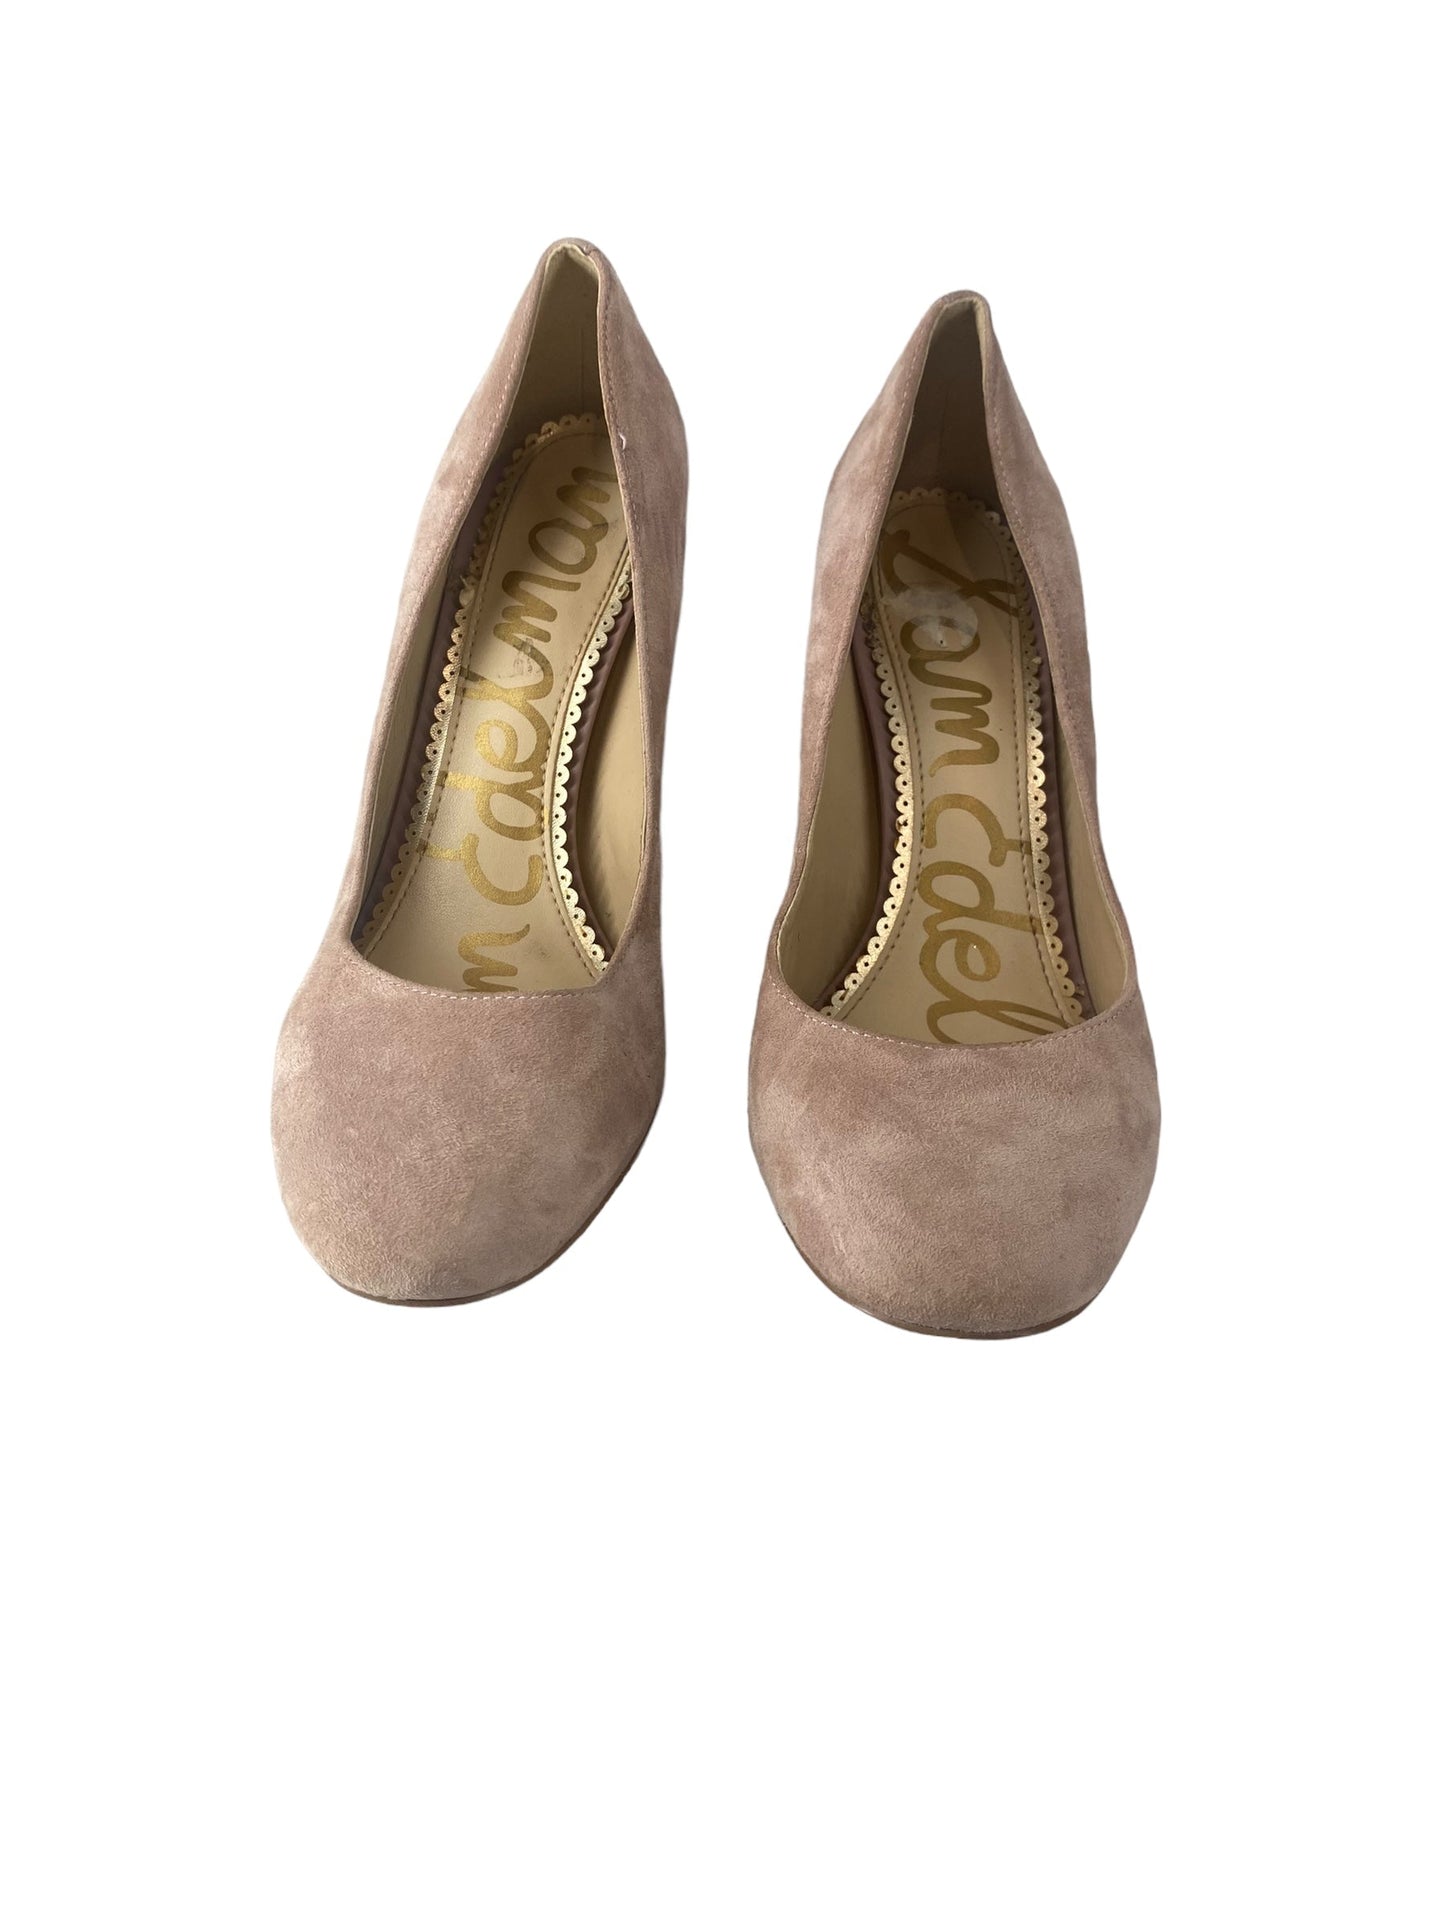 Pink Shoes Heels Block Sam Edelman, Size 6.5